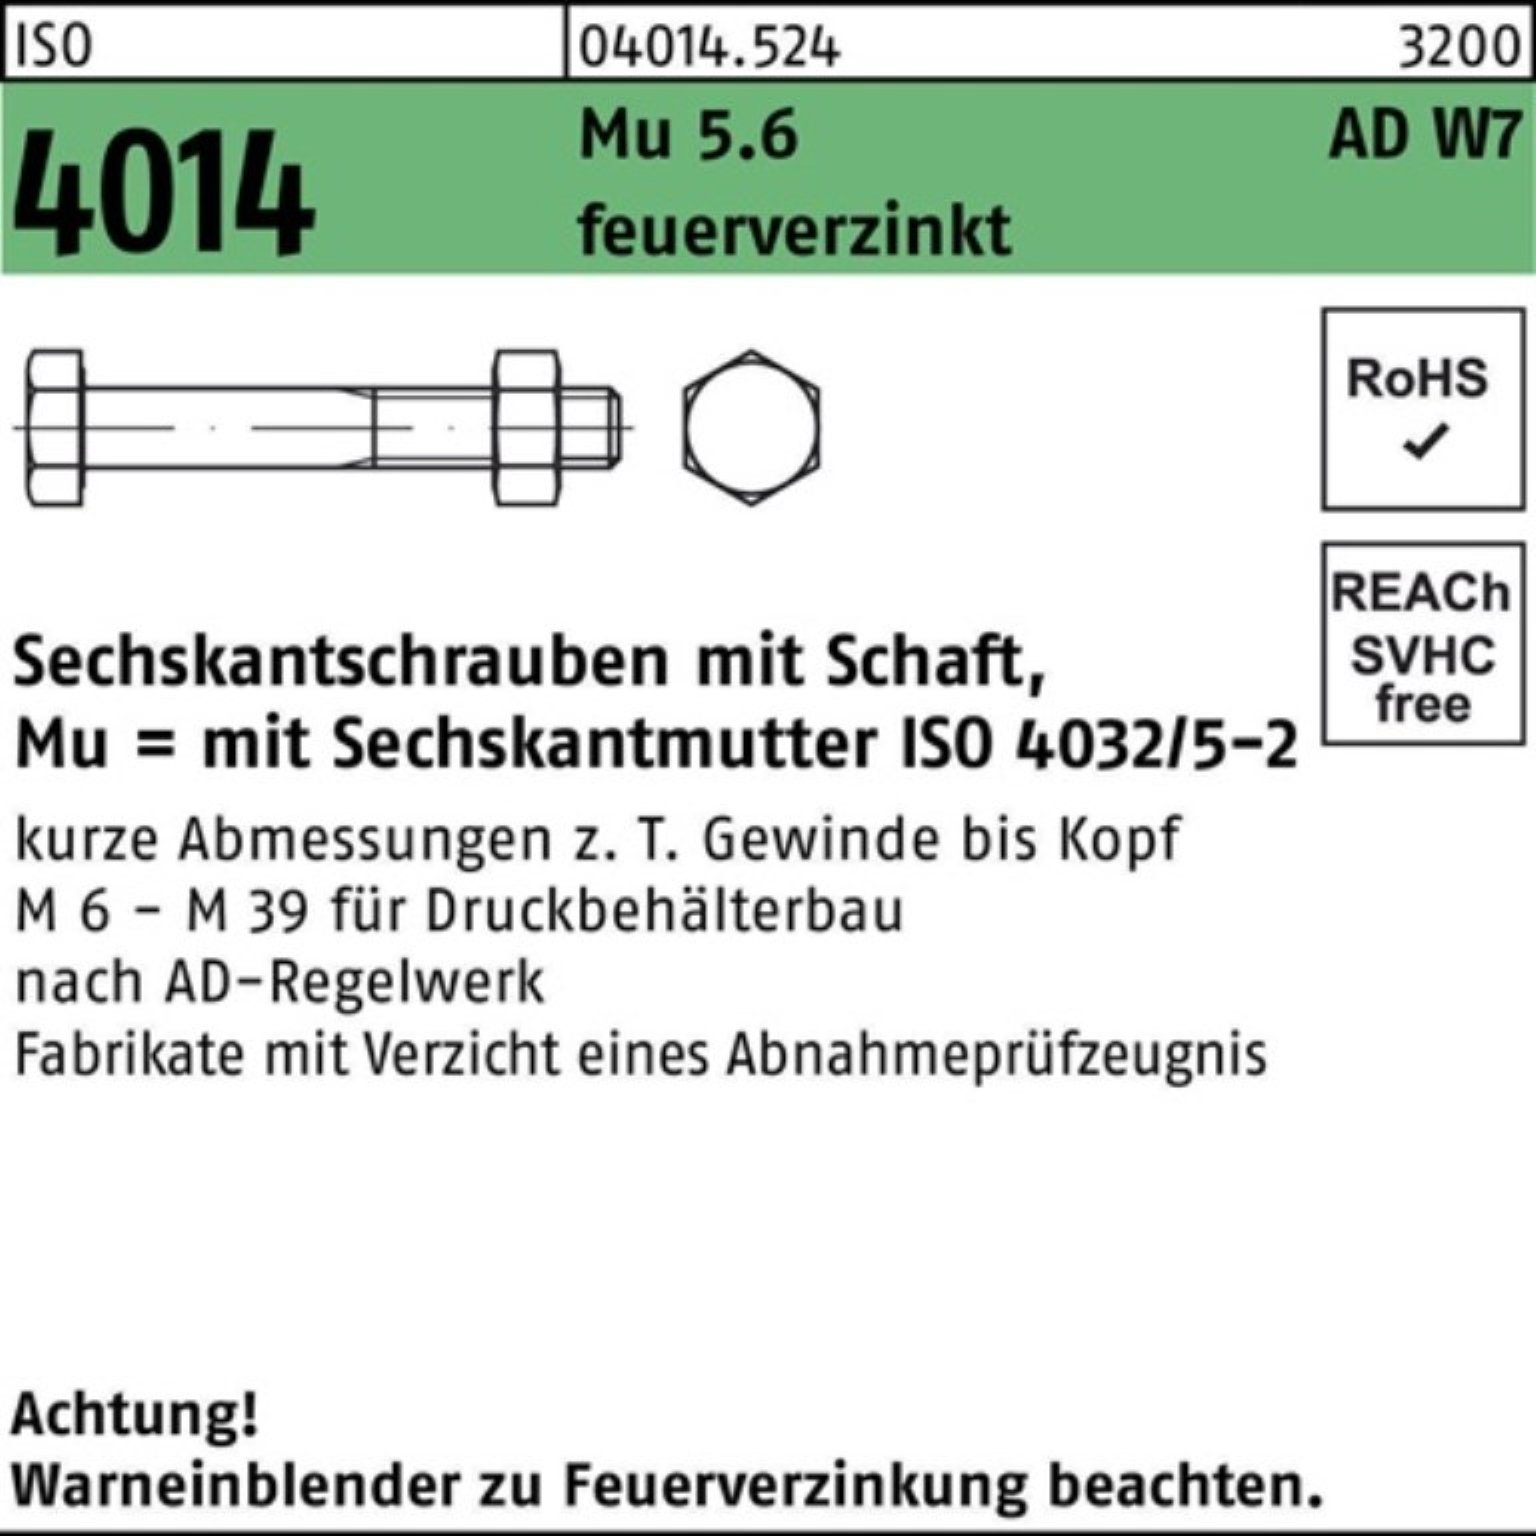 Bufab Sechskantschraube 4014 Mu W7 Sechskantschraube ISO 5.6 Pack 170 Schaft feuerv 100er M16x